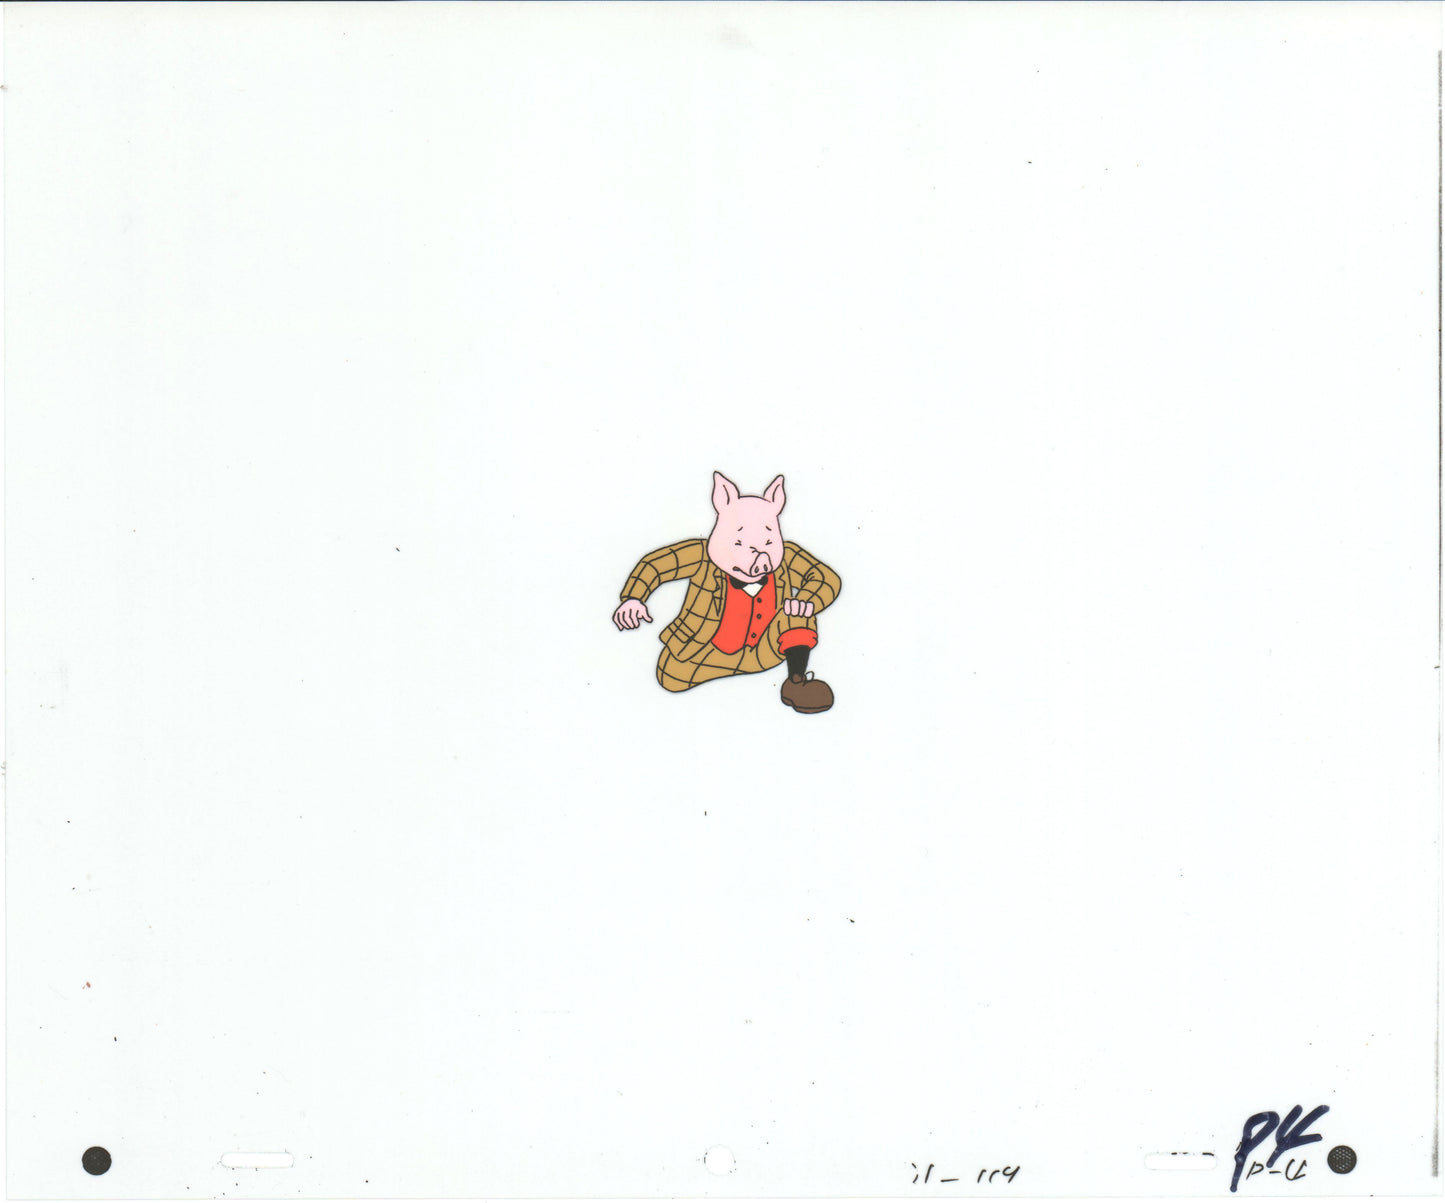 RUPERT Bear Podgy Pig Original Production Animation Cel from the Cartoon by Nelvana Tourtel Animation 1990s 8-339